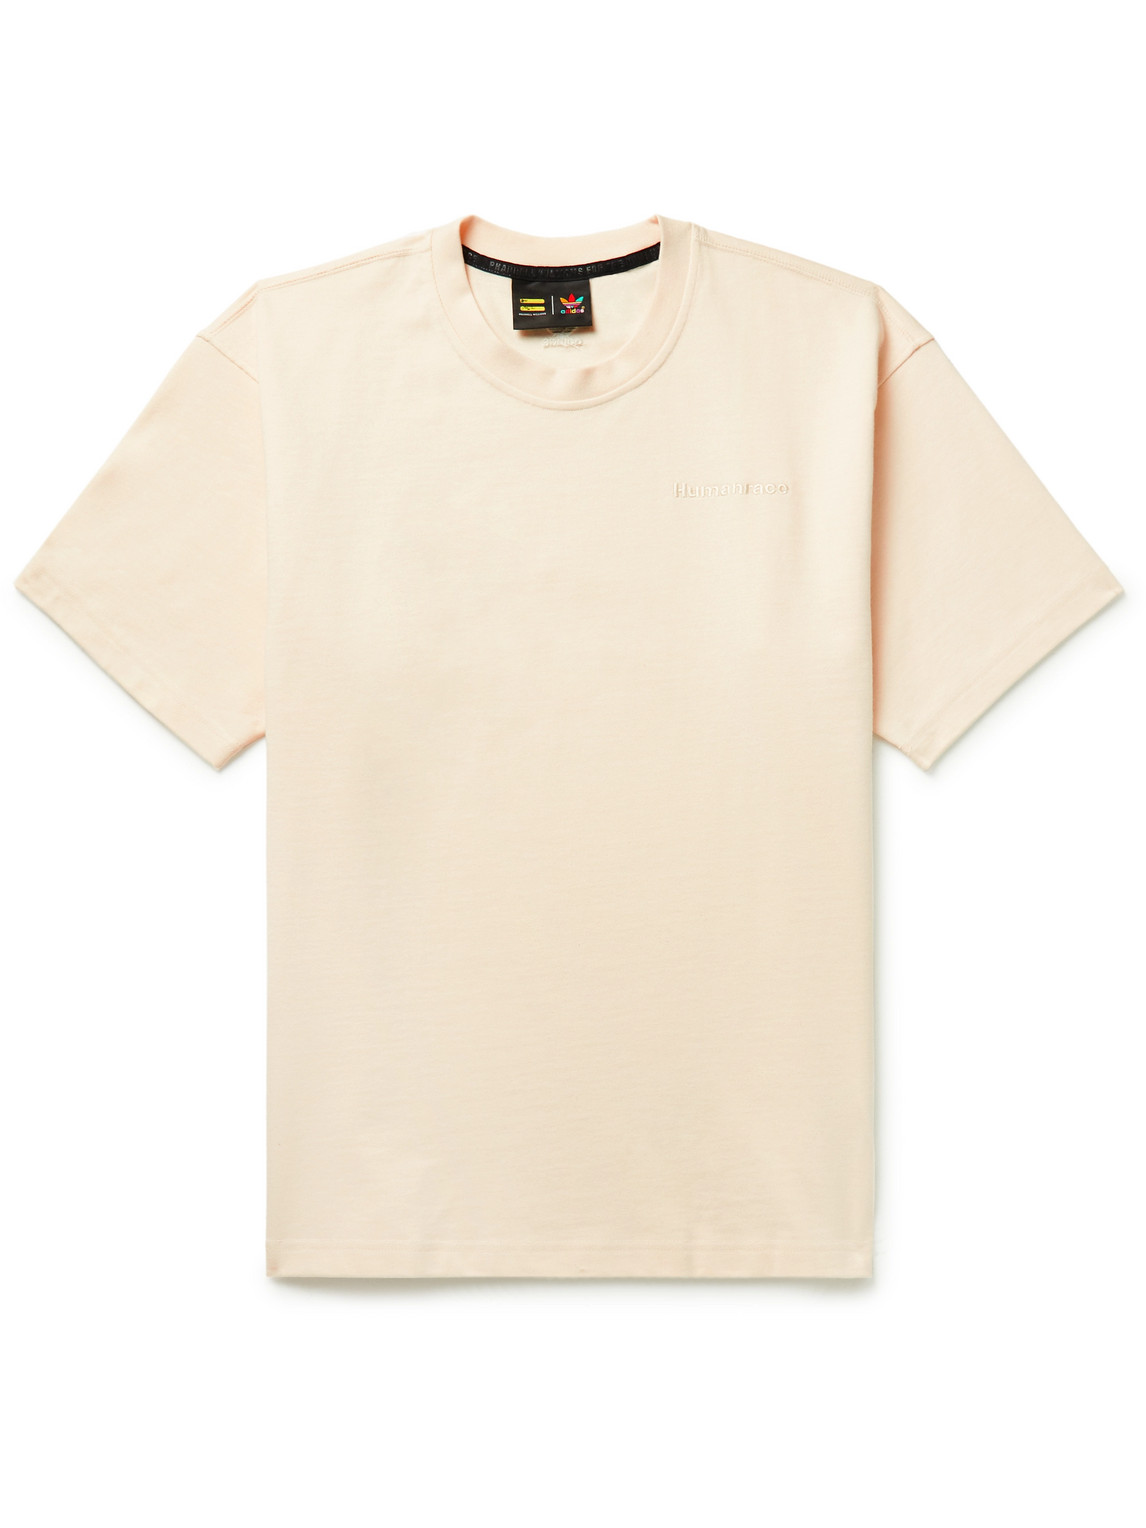 Adidas Consortium Pharrell Williams Basics Embroidered Cotton-jersey T-shirt In Neutrals